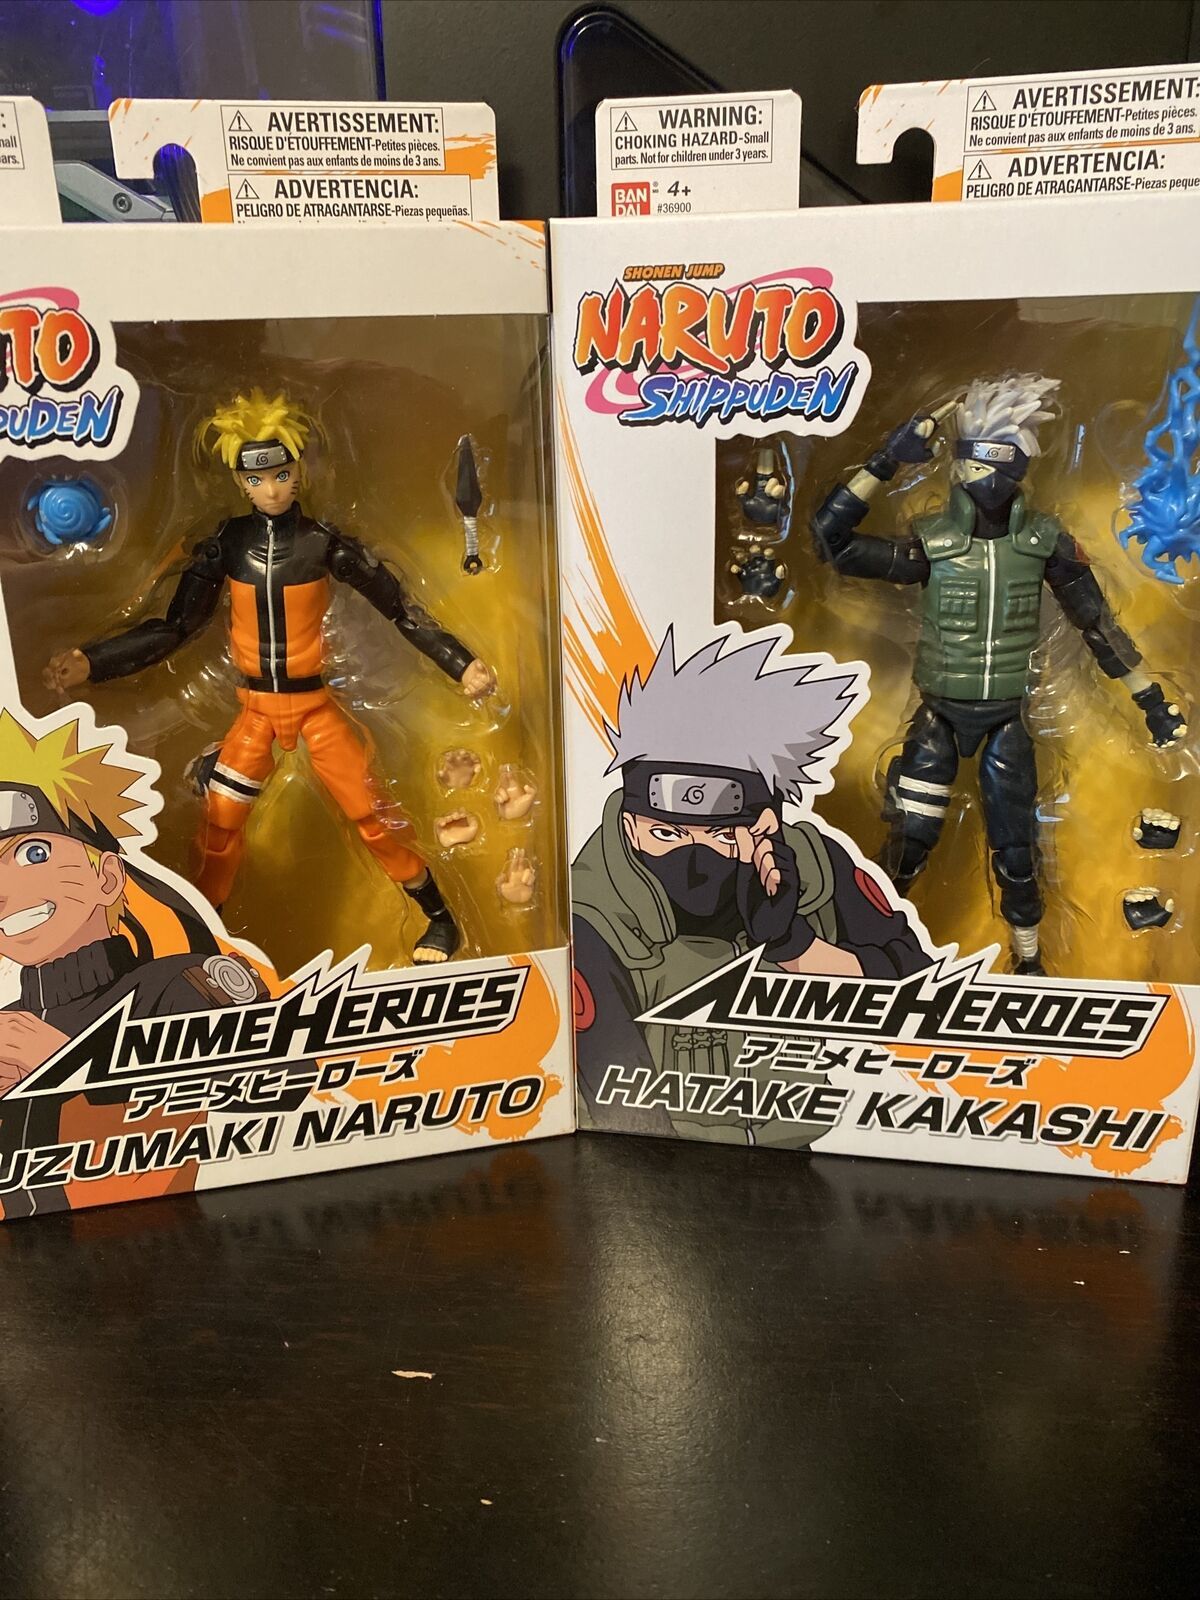 Primary image for Bandai Naruto Shippuden Anime Heroes Series 6in Naruto/Kakashi Action Figure NEW